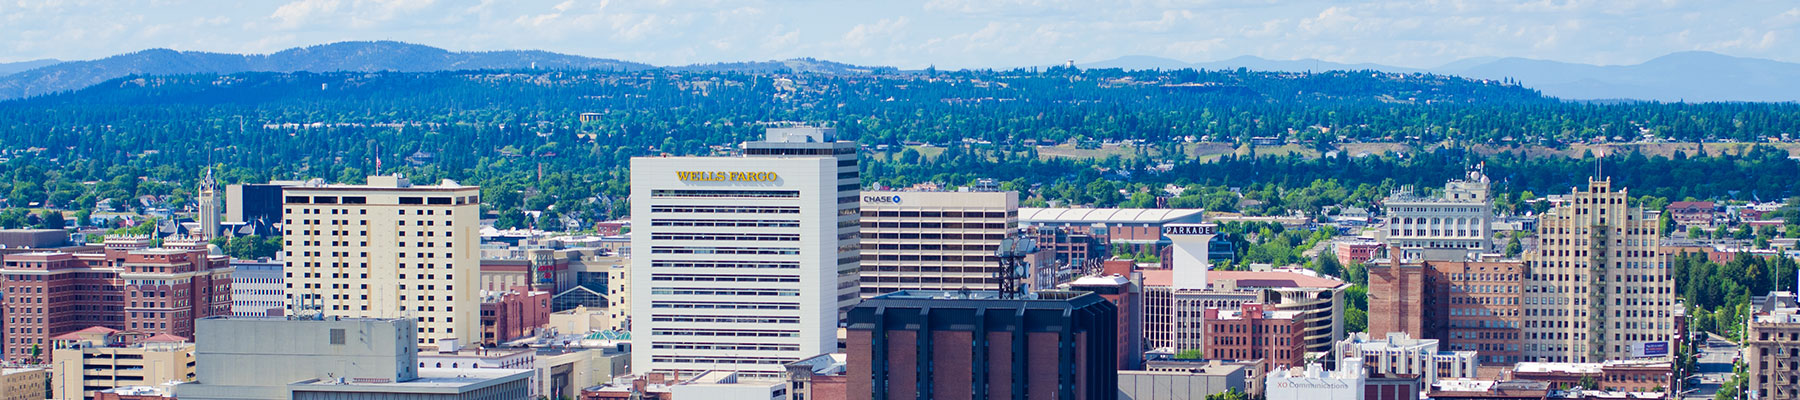 Downtown view of buildings in Spokane